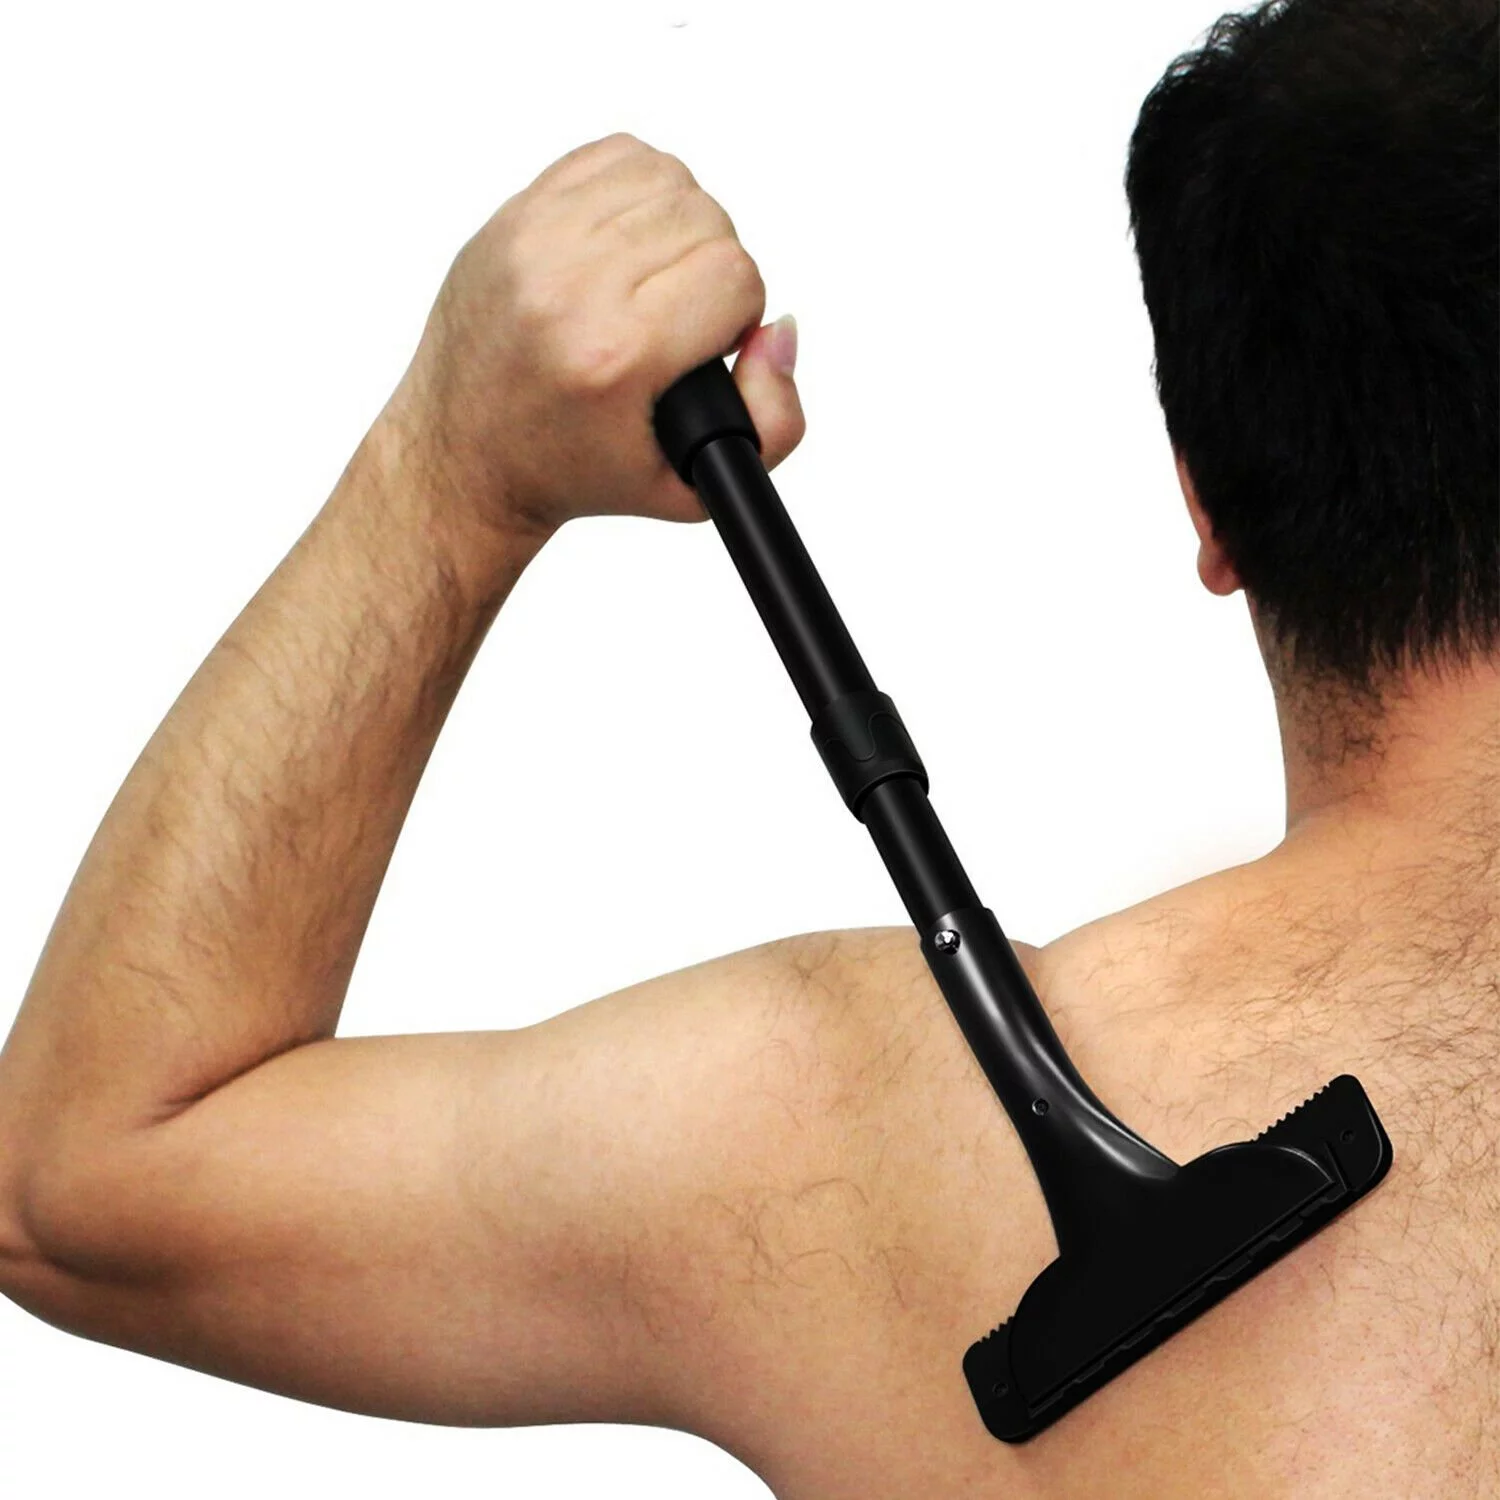 PureOriginal Adjustable Back and Body Hair Shaver Manual Razor Trimmer for Men